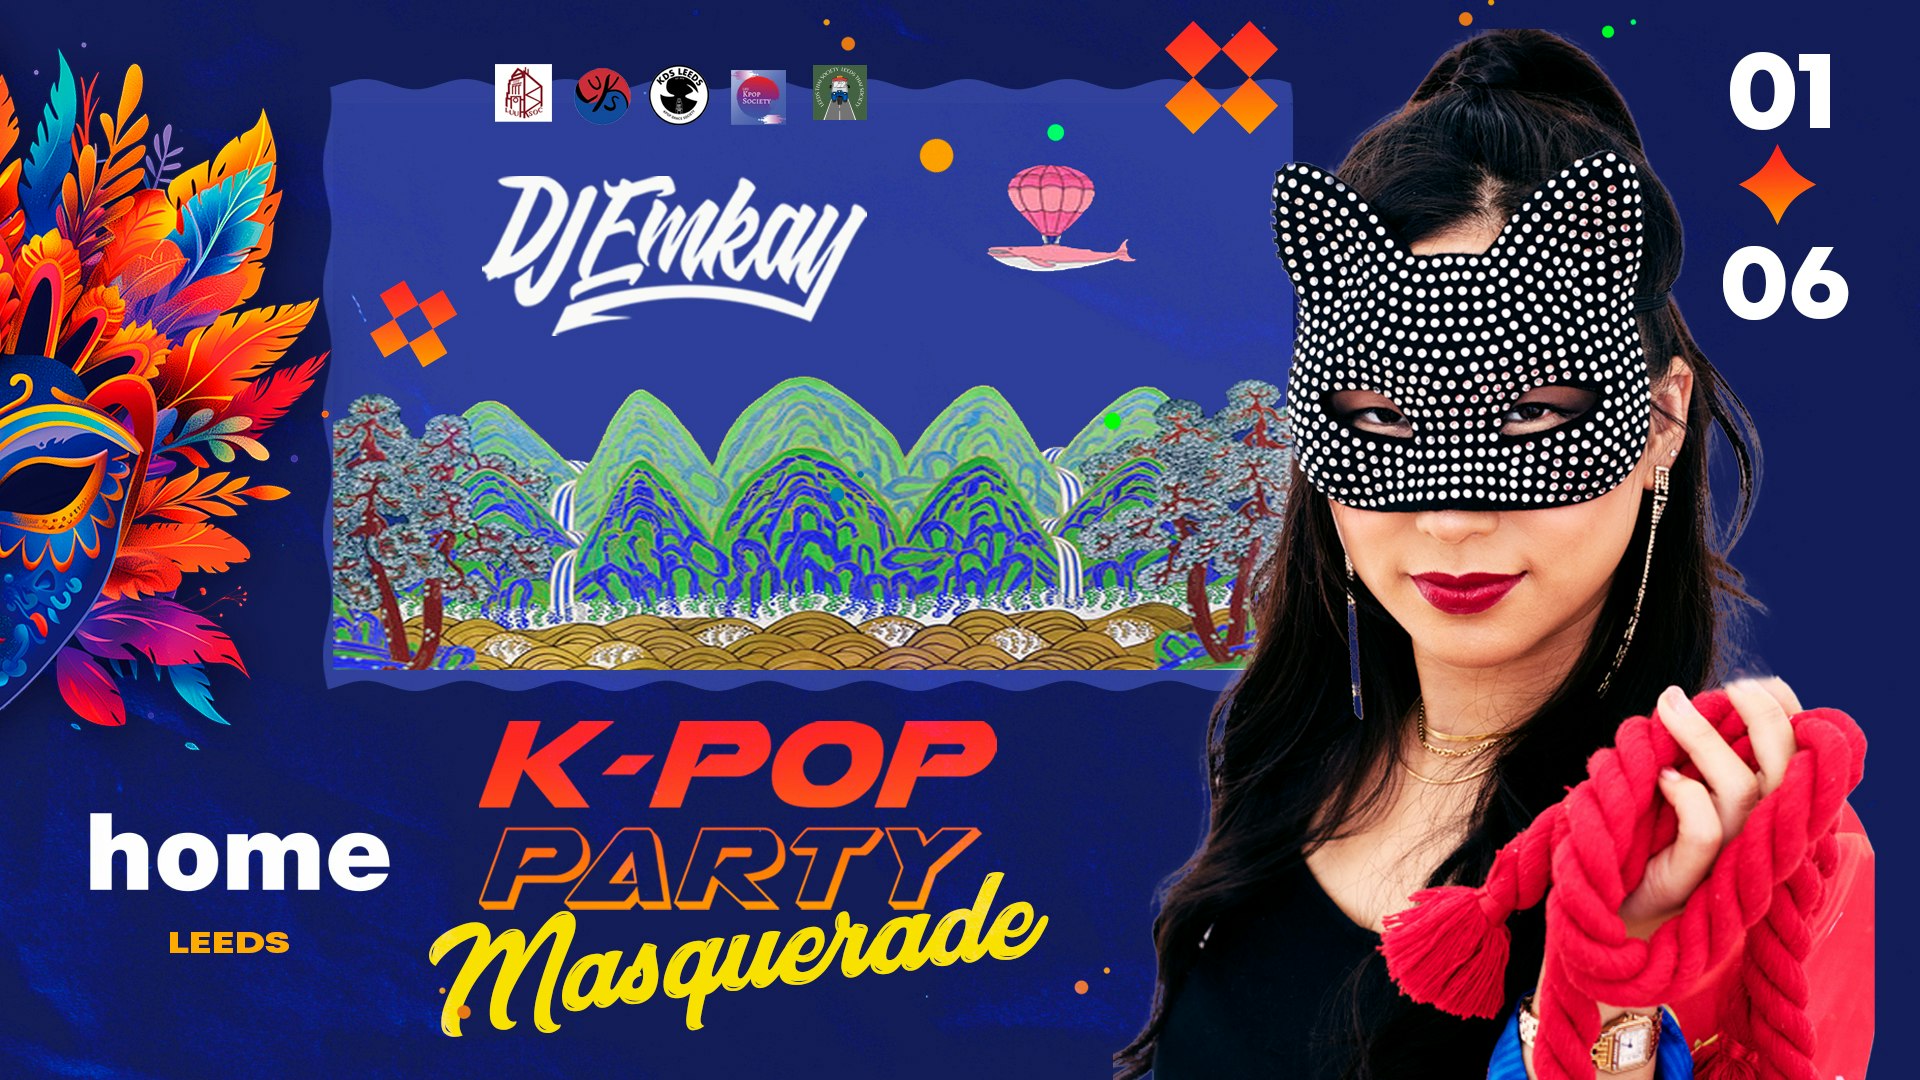 K-Pop MASQUERADE Party Leeds with DJ EMKAY | Saturday 1st June